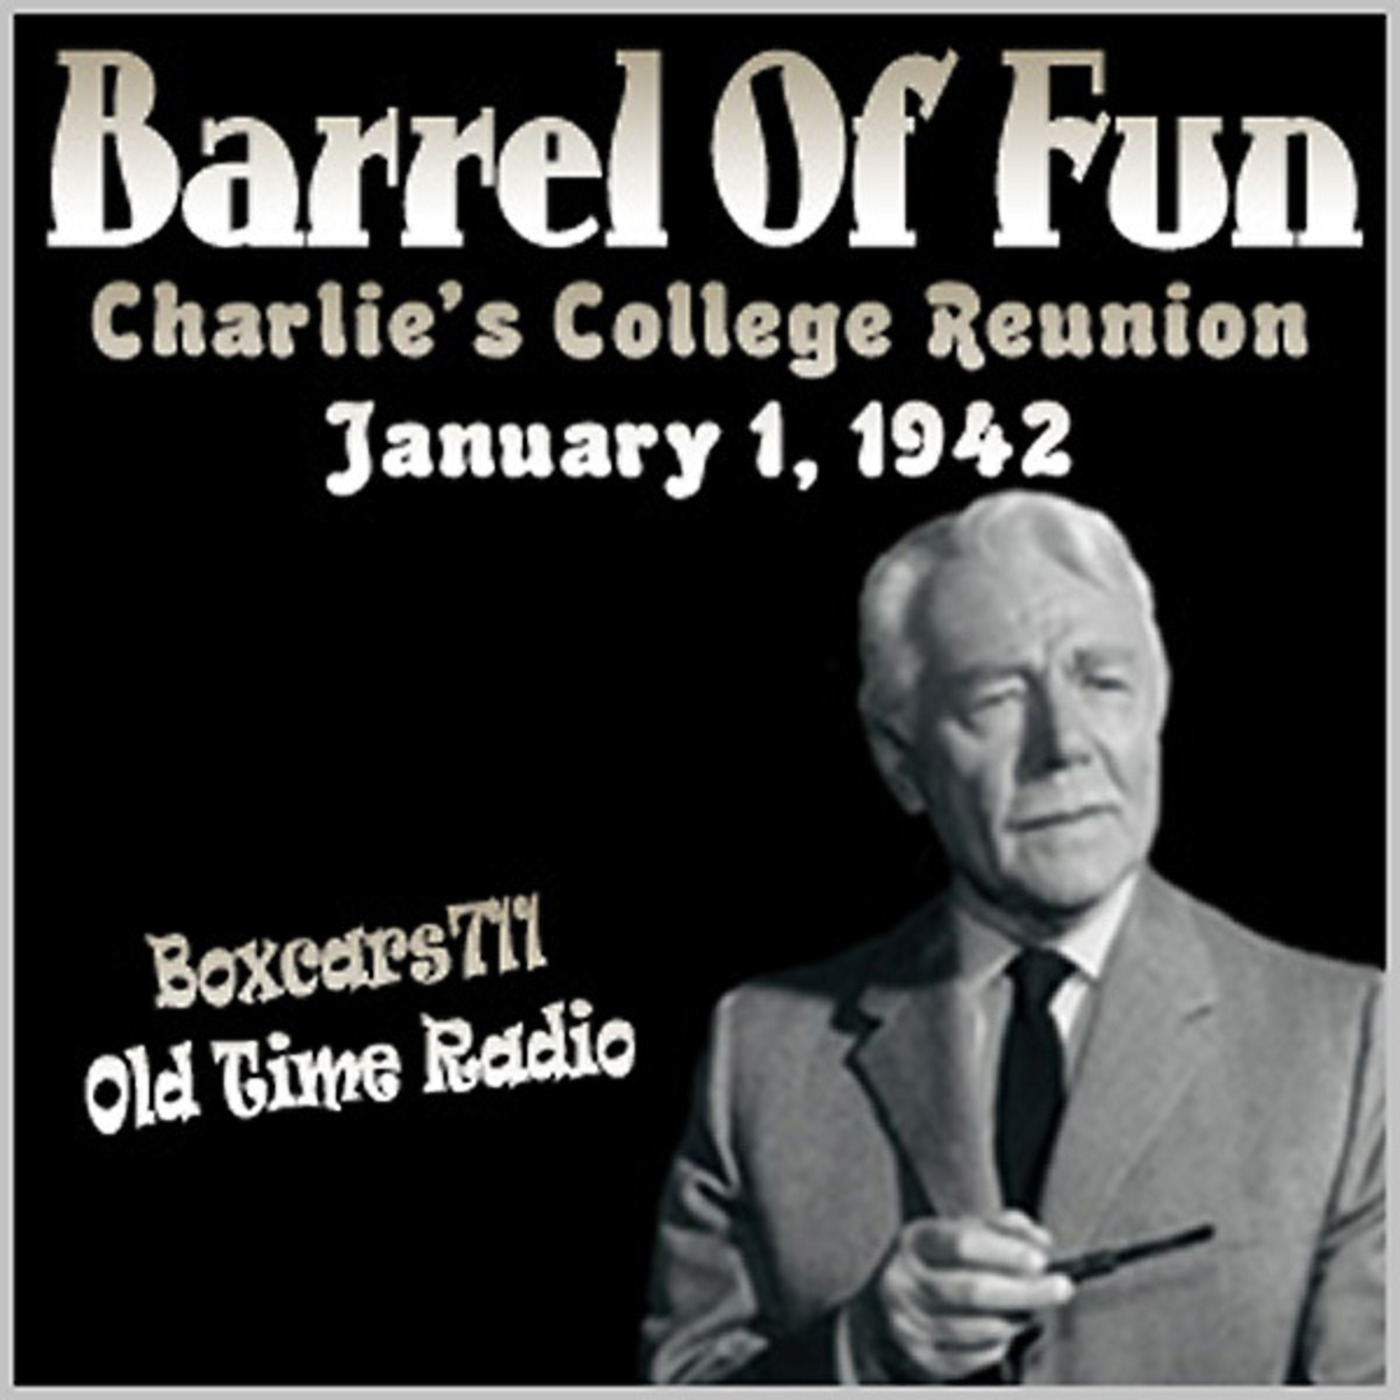 Episode 9577: Barrel Of Fun - 